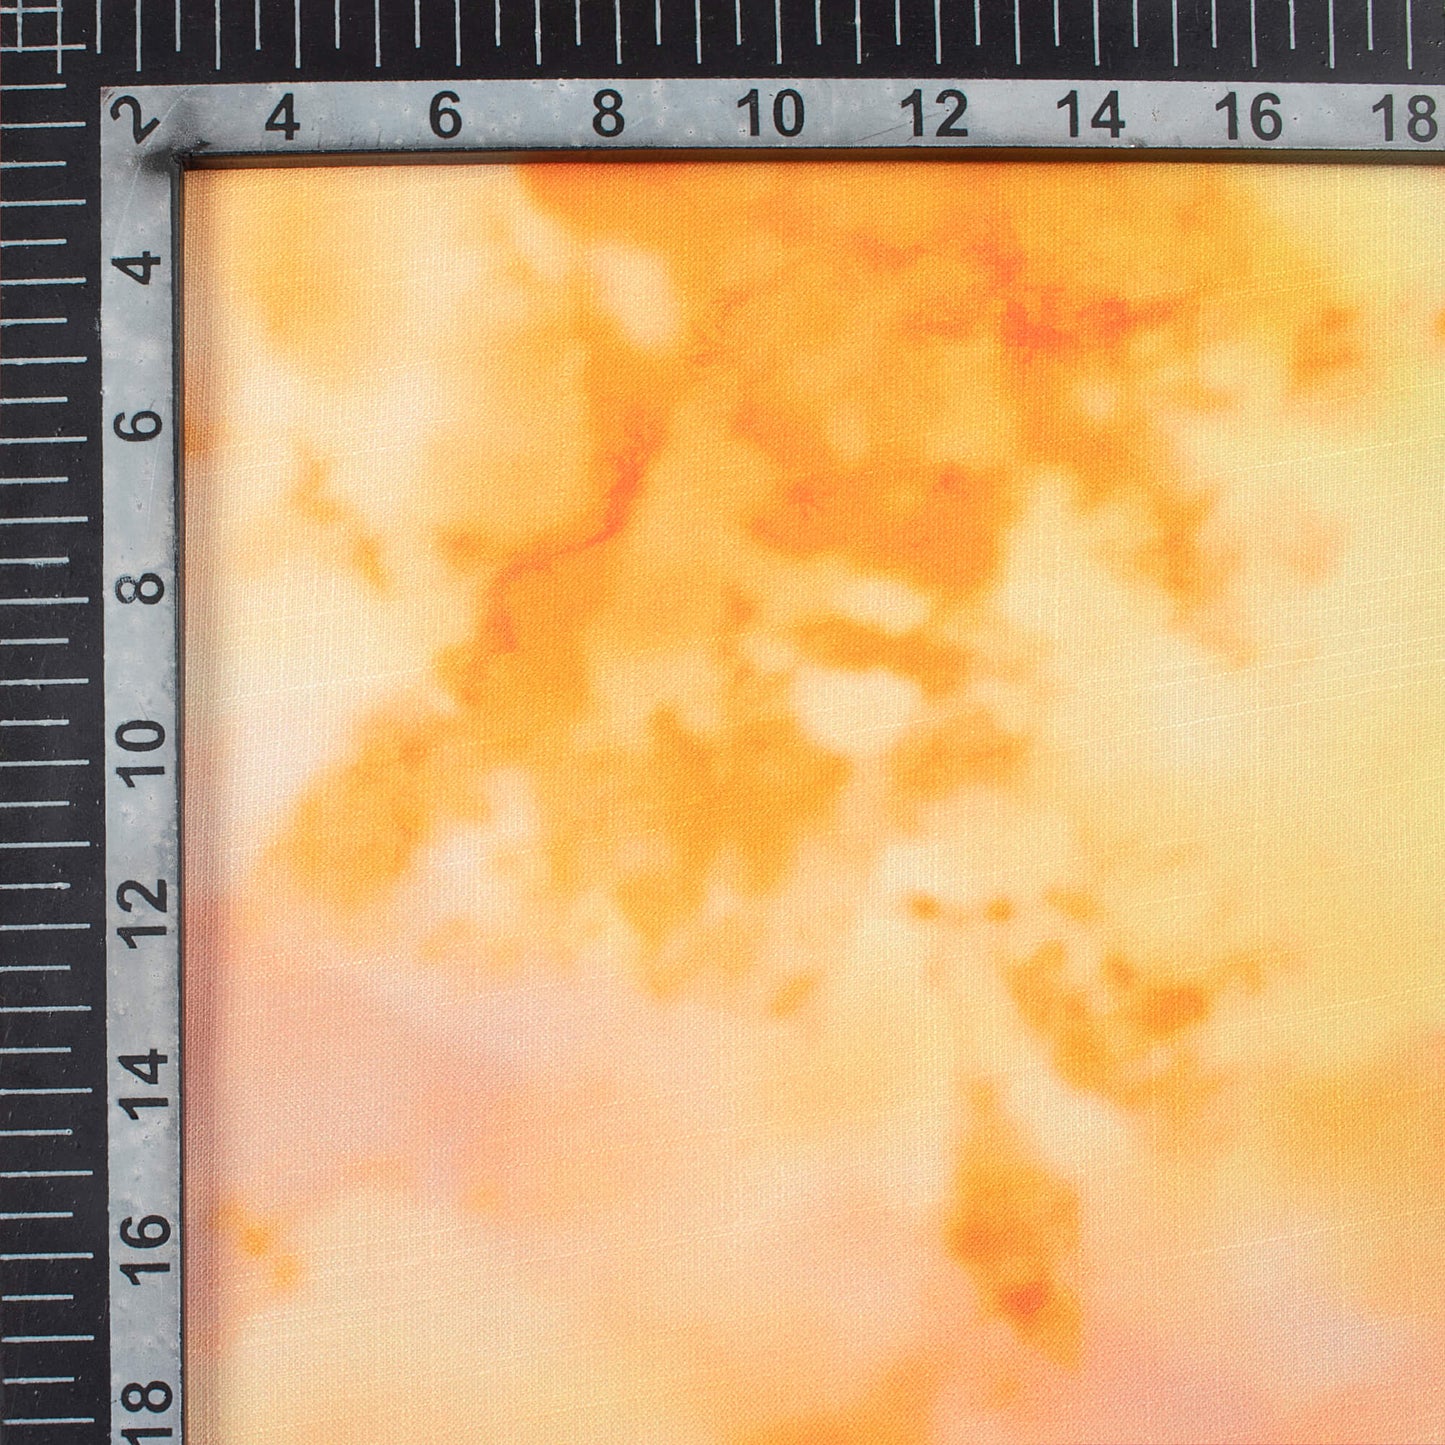 Carrot Orange Tie & Dye Pattern Digital Print Poly Linen Fabric